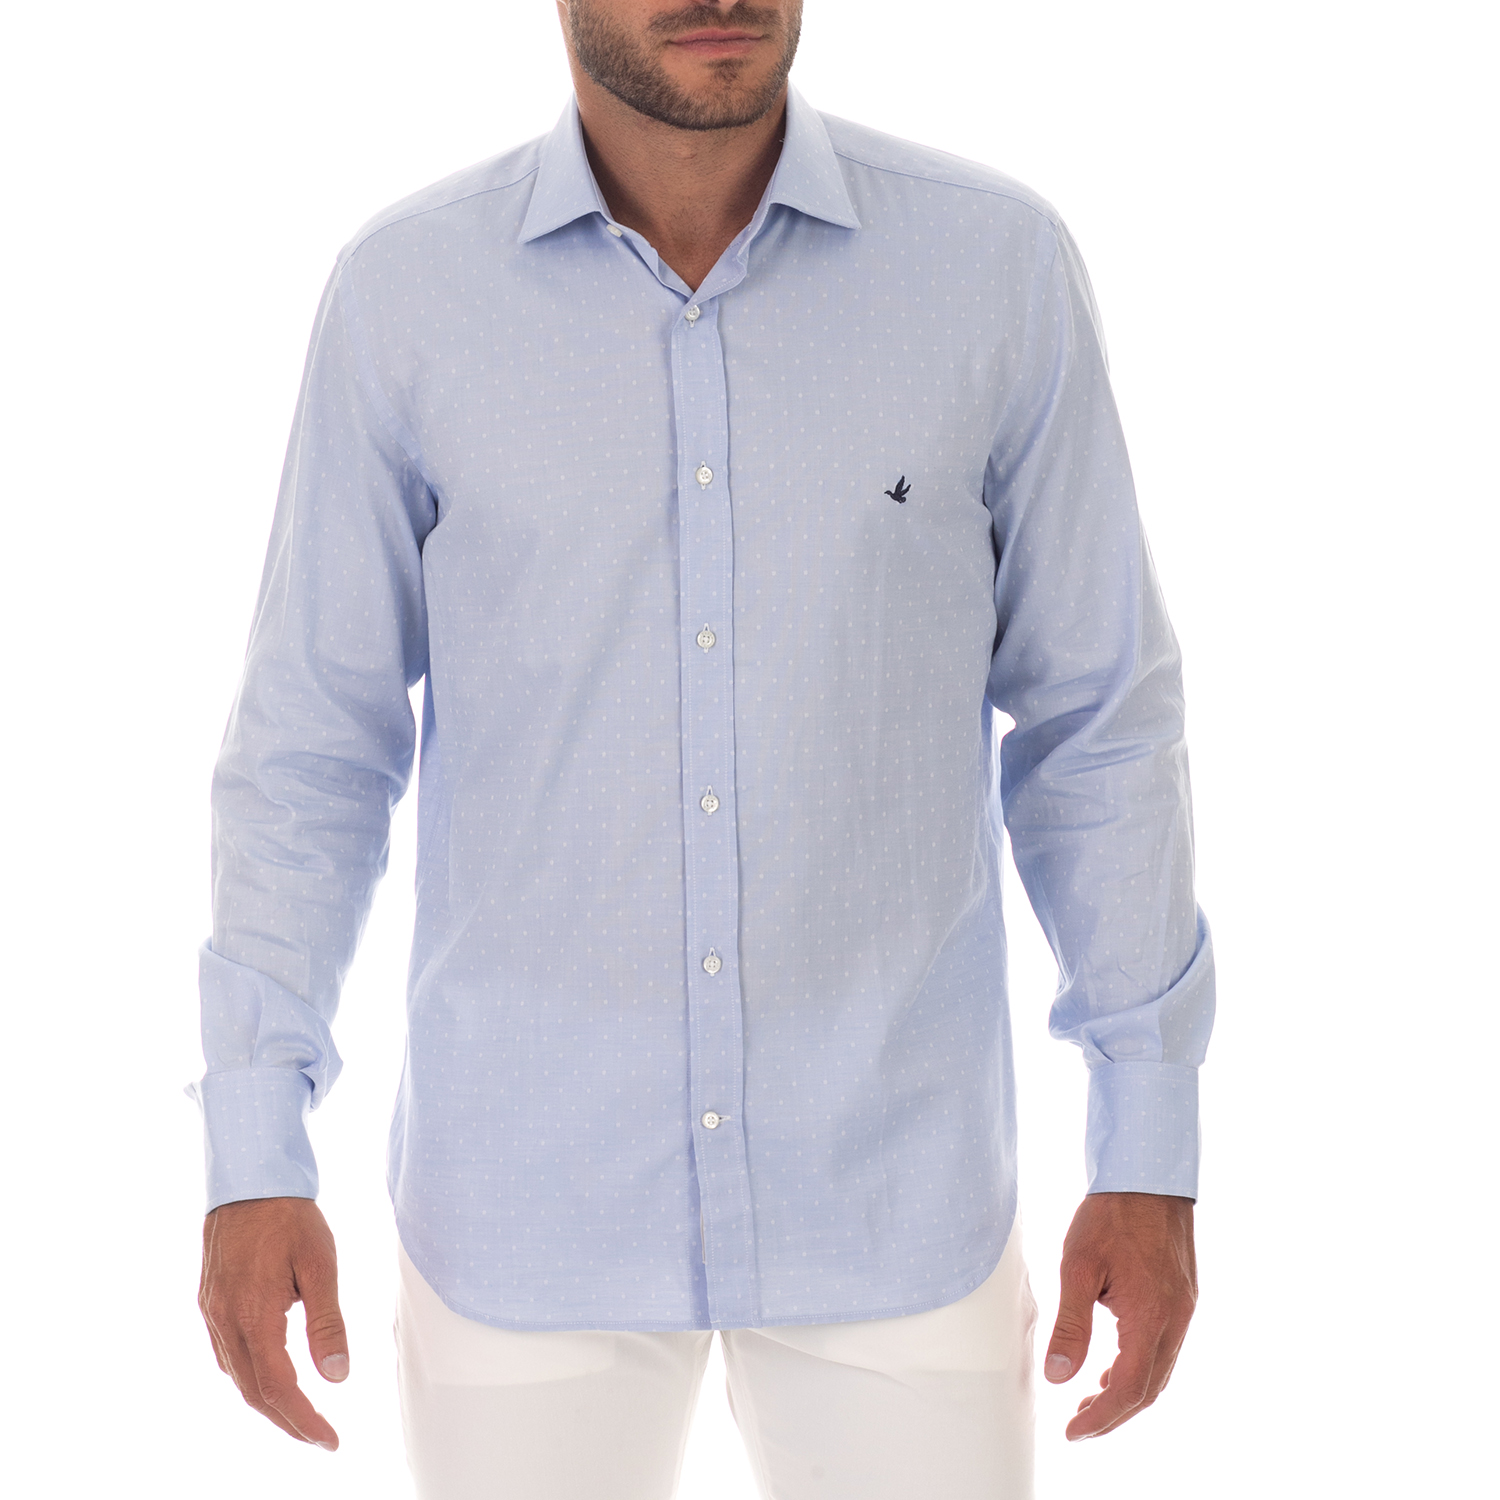 BROOKSFIELD - Ανδρικό πουκάμισο BROOKSFIELD SLIM FIT πουά μπλε Ανδρικά/Ρούχα/Πουκάμισα/Μακρυμάνικα